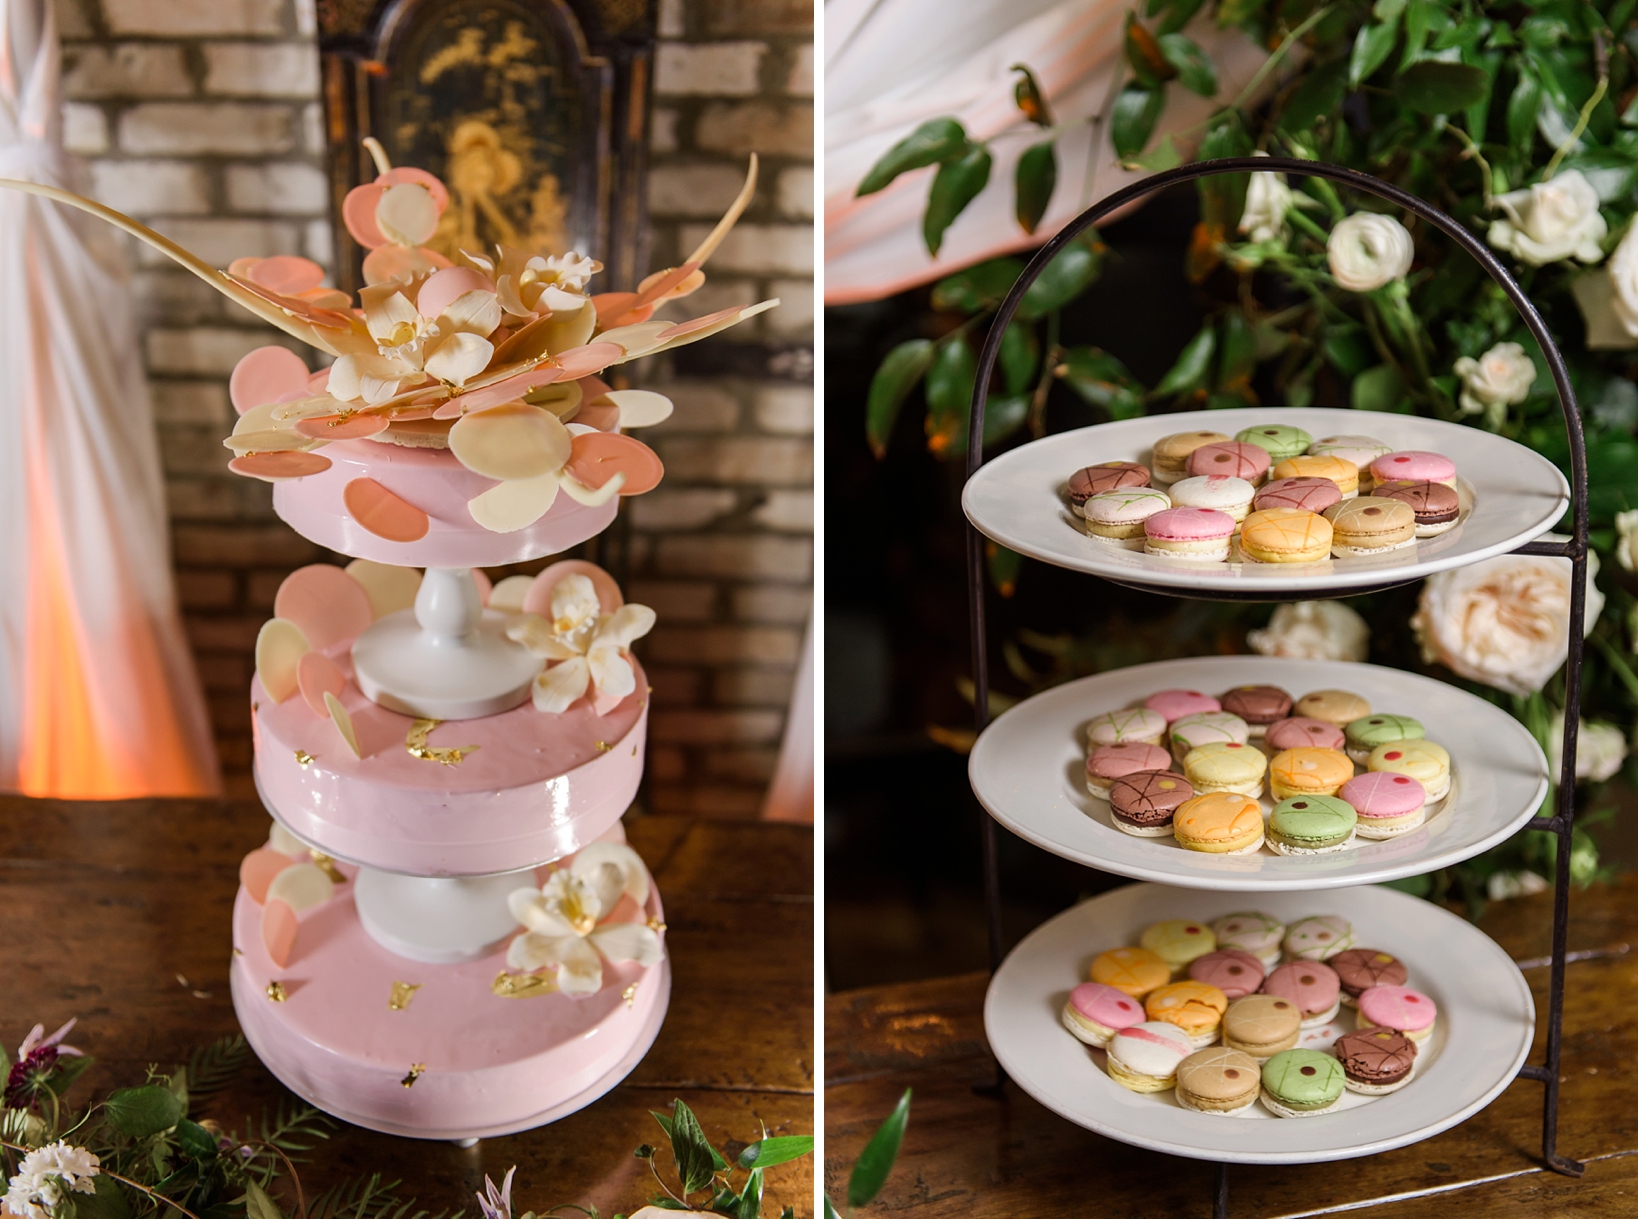 Custom wedding cake and handmade macarons by Sarah & Ben Photography